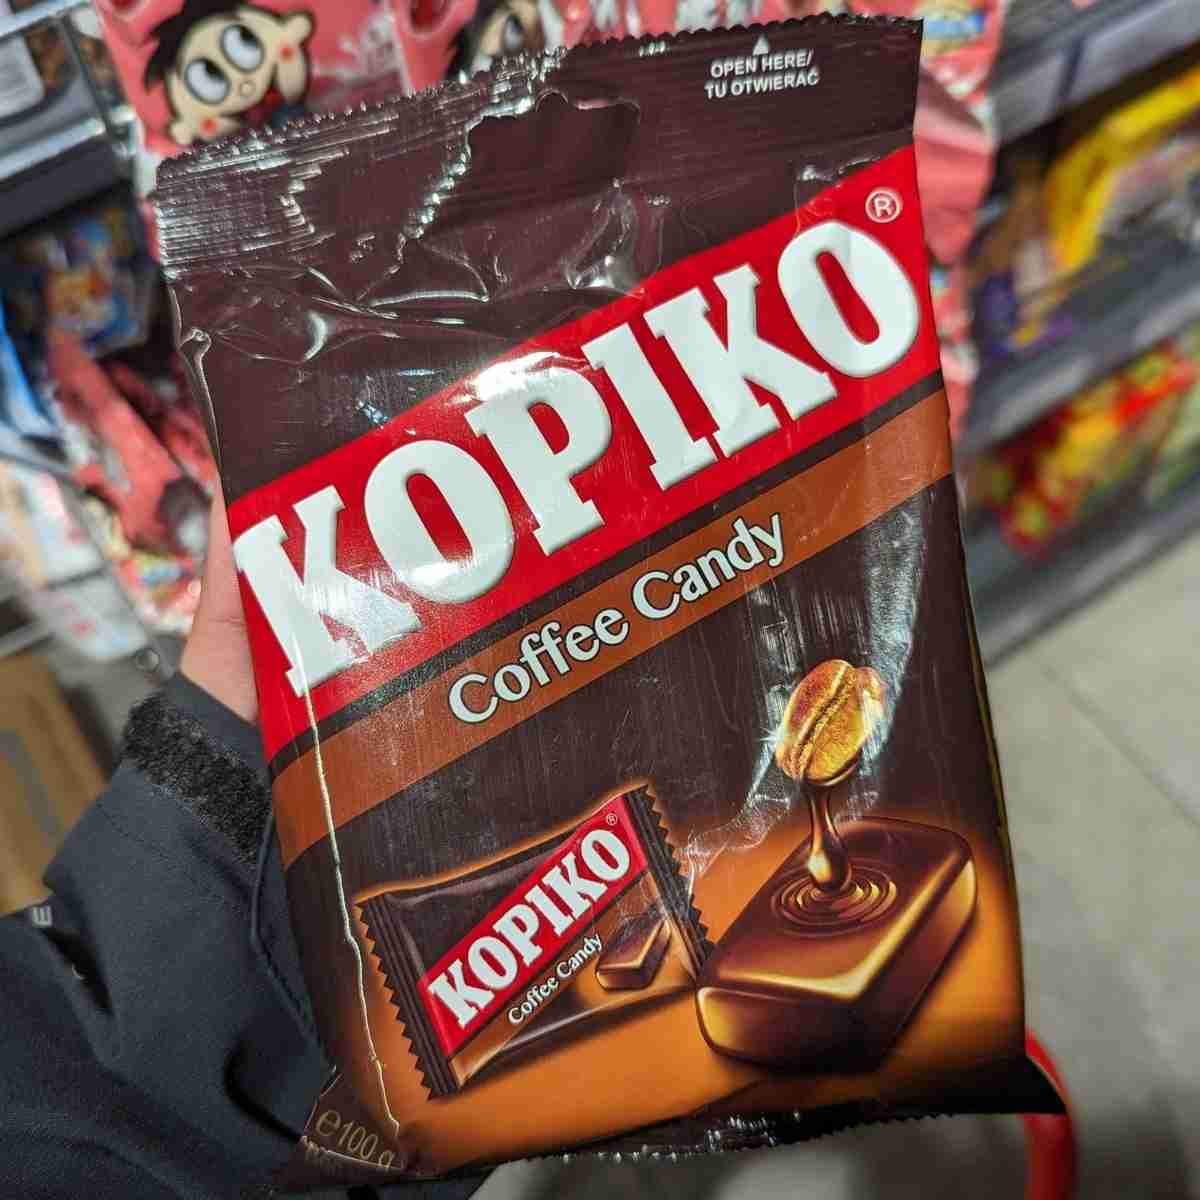 Kopiko coffee candy